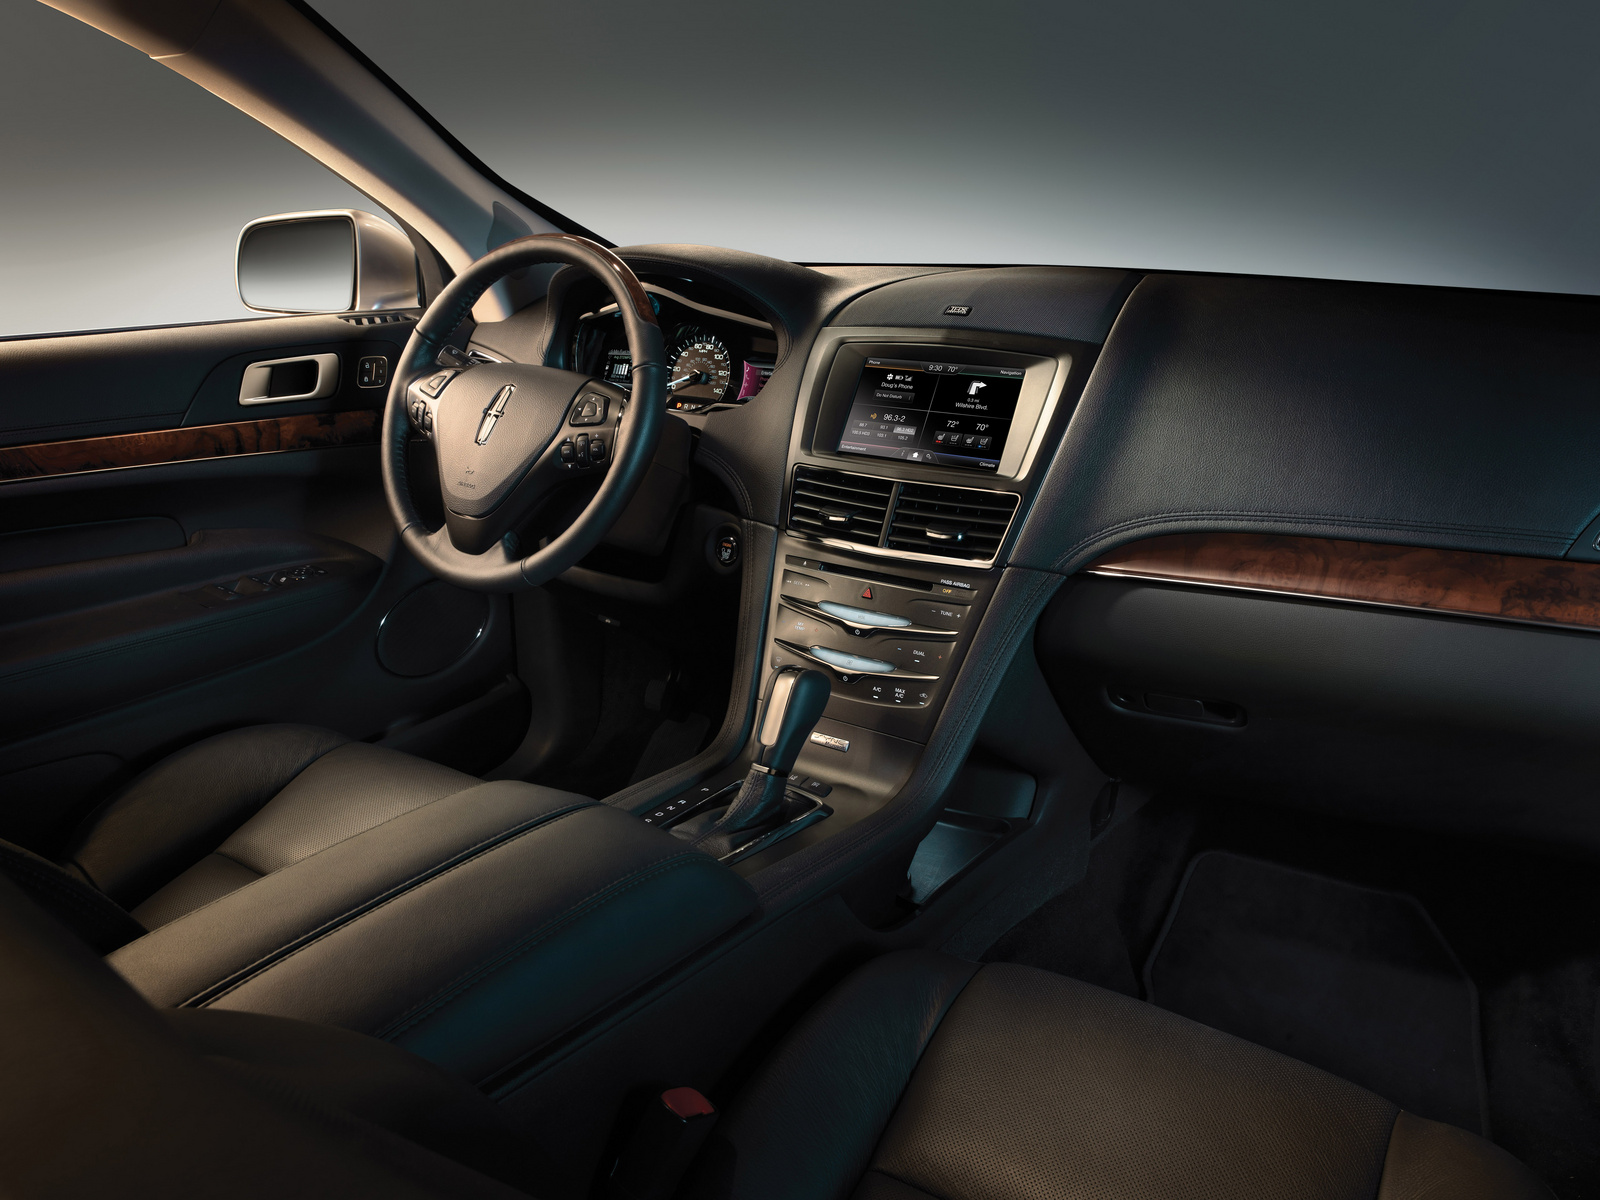 2014 Lincoln MKT Dashboard Interior